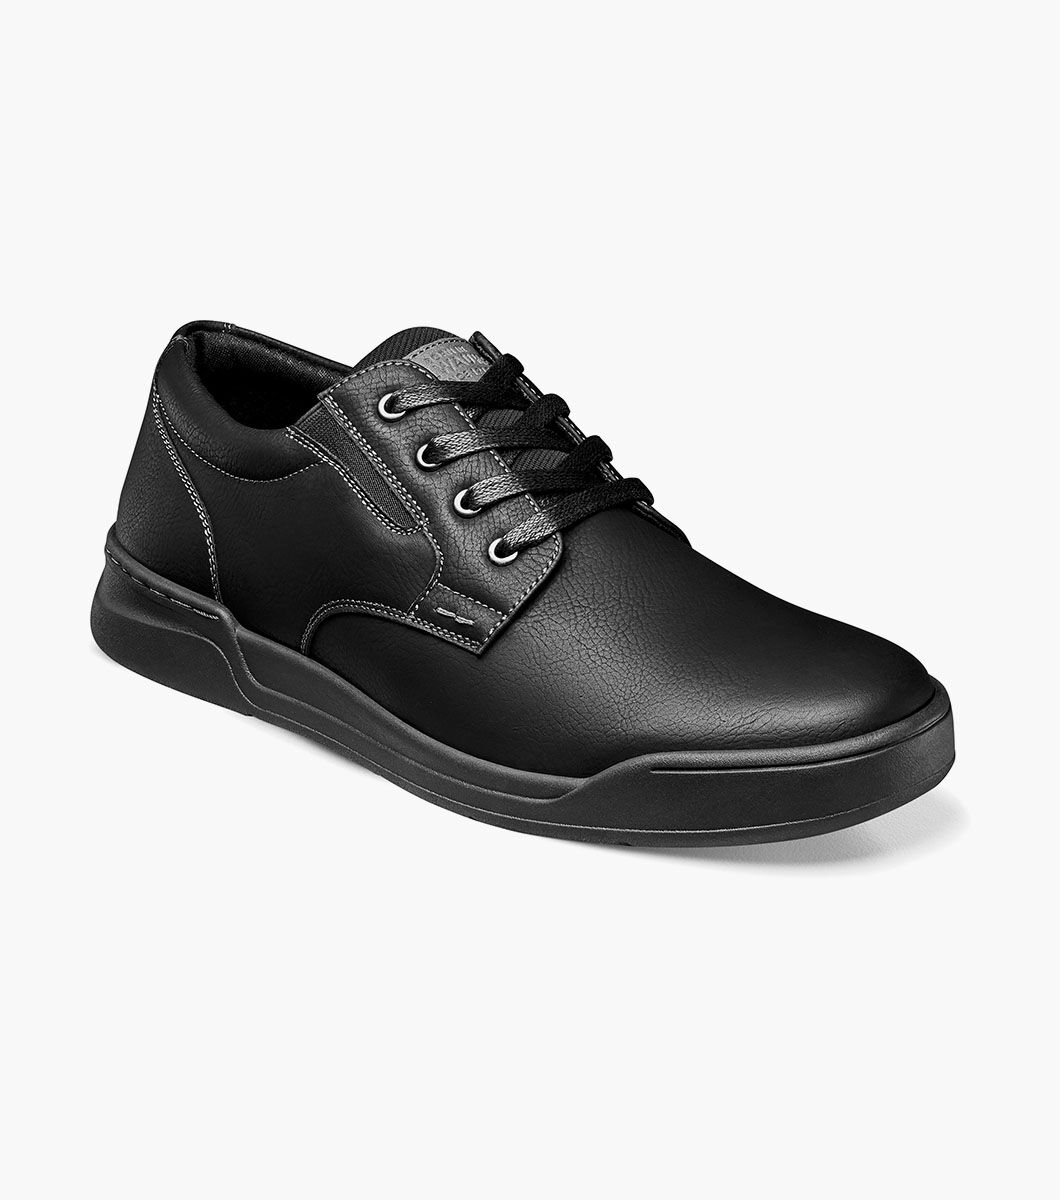 Nunn Bush Shoes Tour Work Plain Toe Oxford Black Smooth Size 9.5